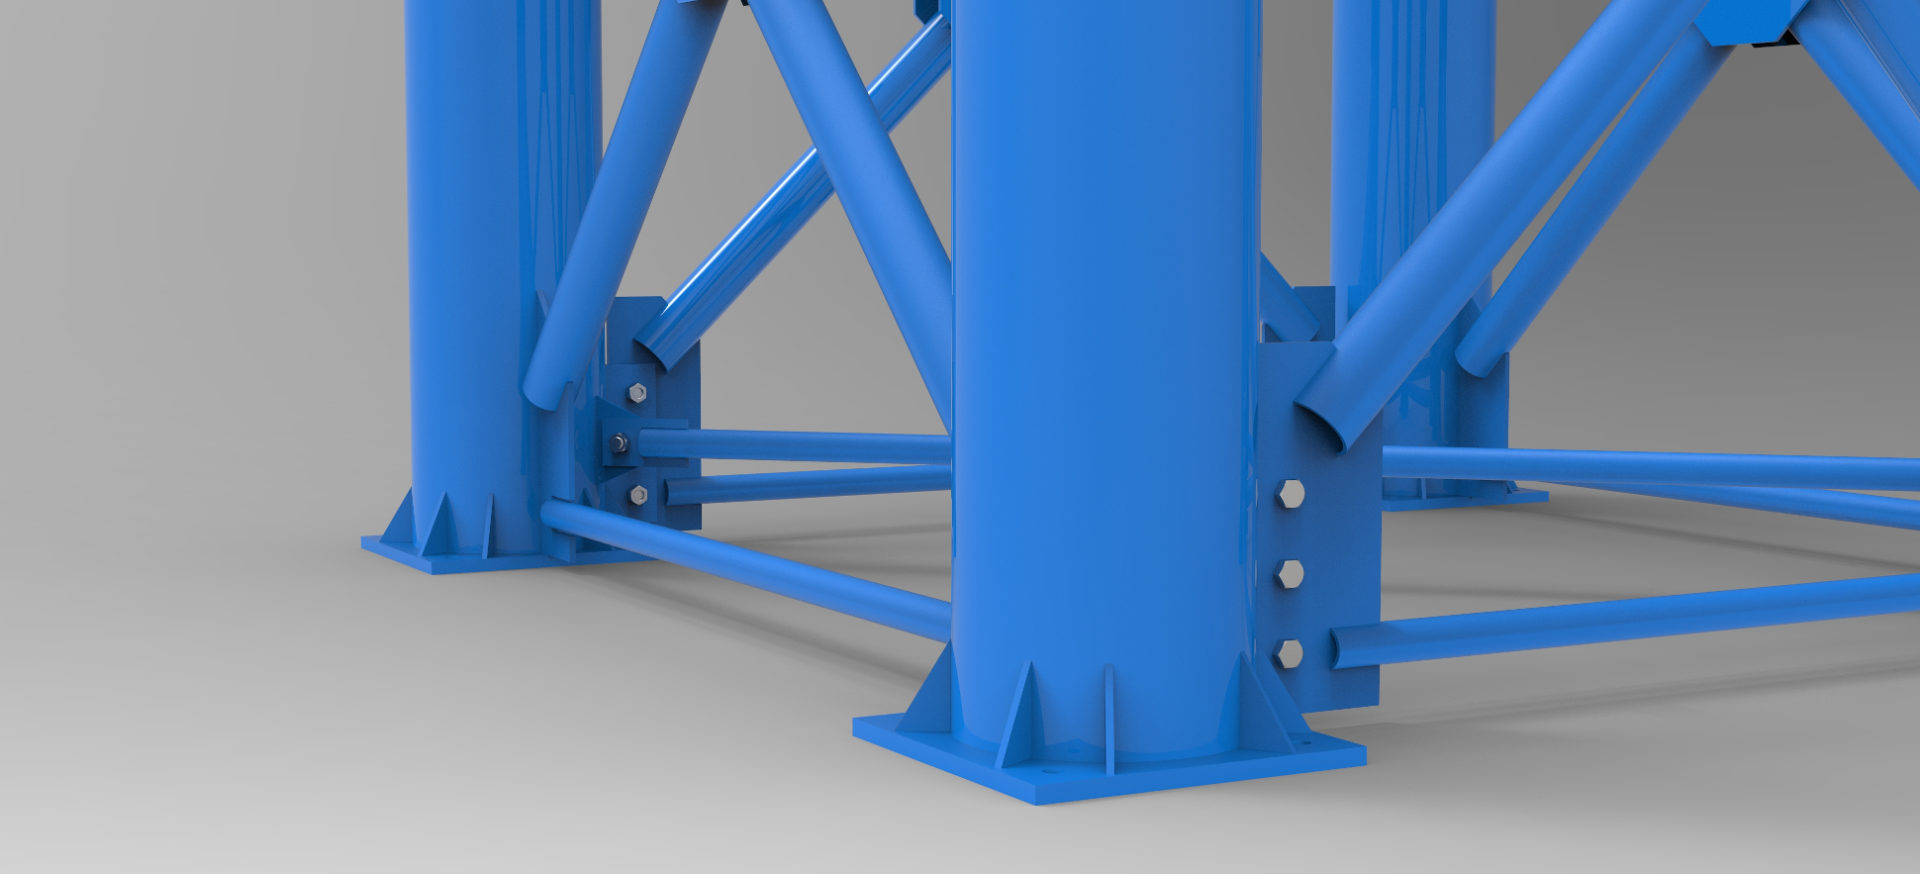 Production of bridge supports – cage bridge segmented